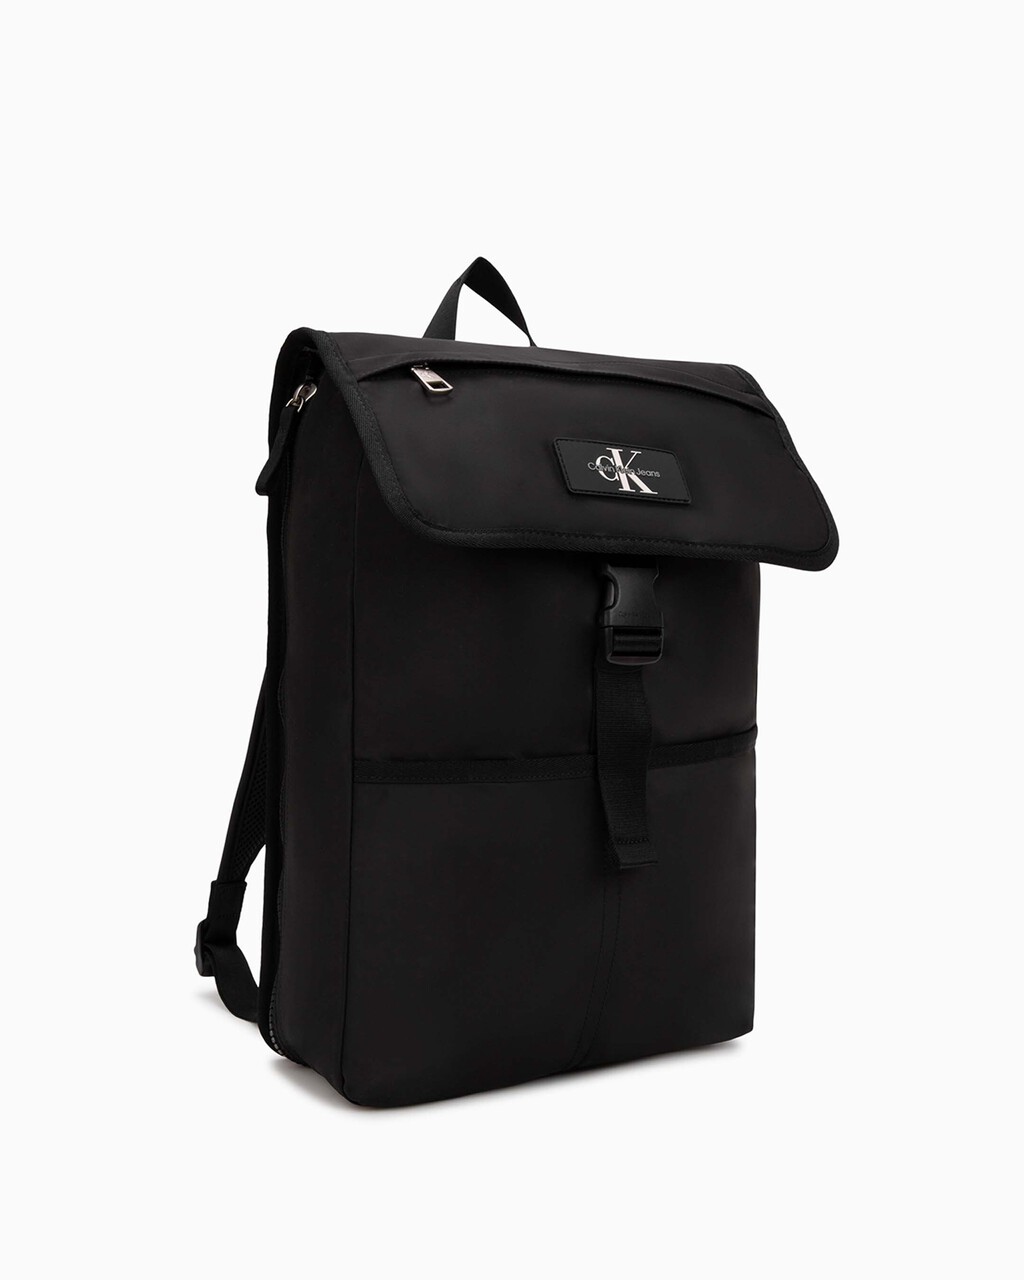 Expandable Square Flap Backpack, BLACK, hi-res